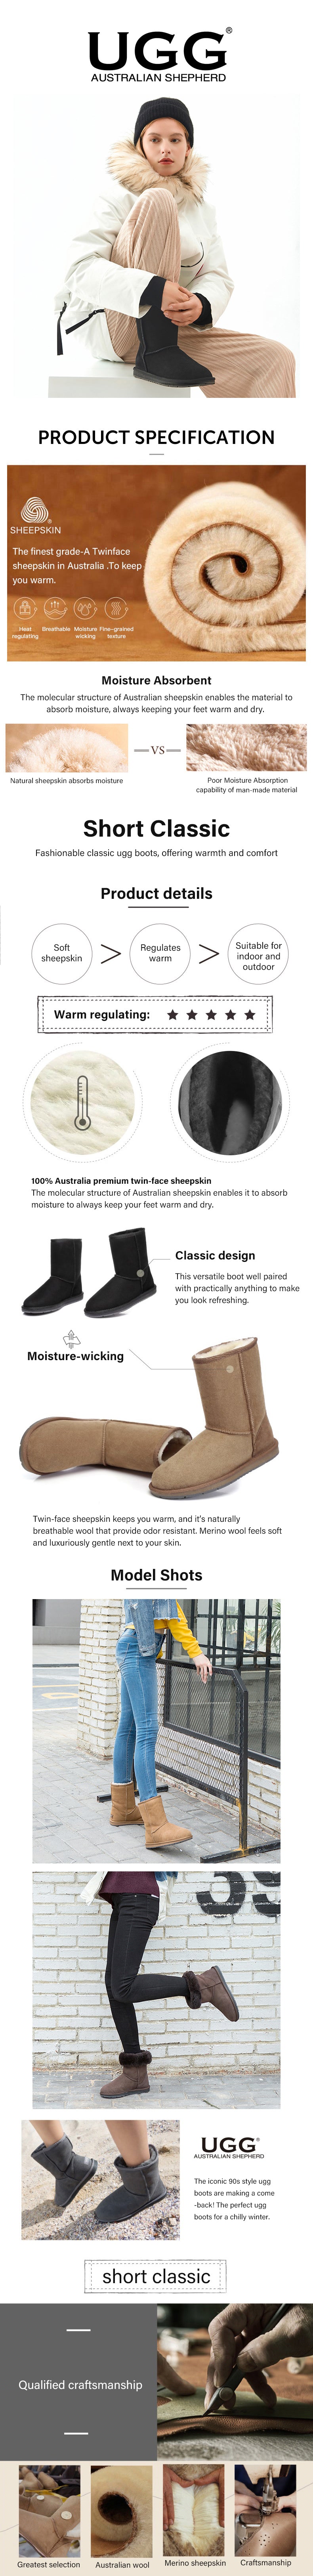 australian shepherd ugg boots review